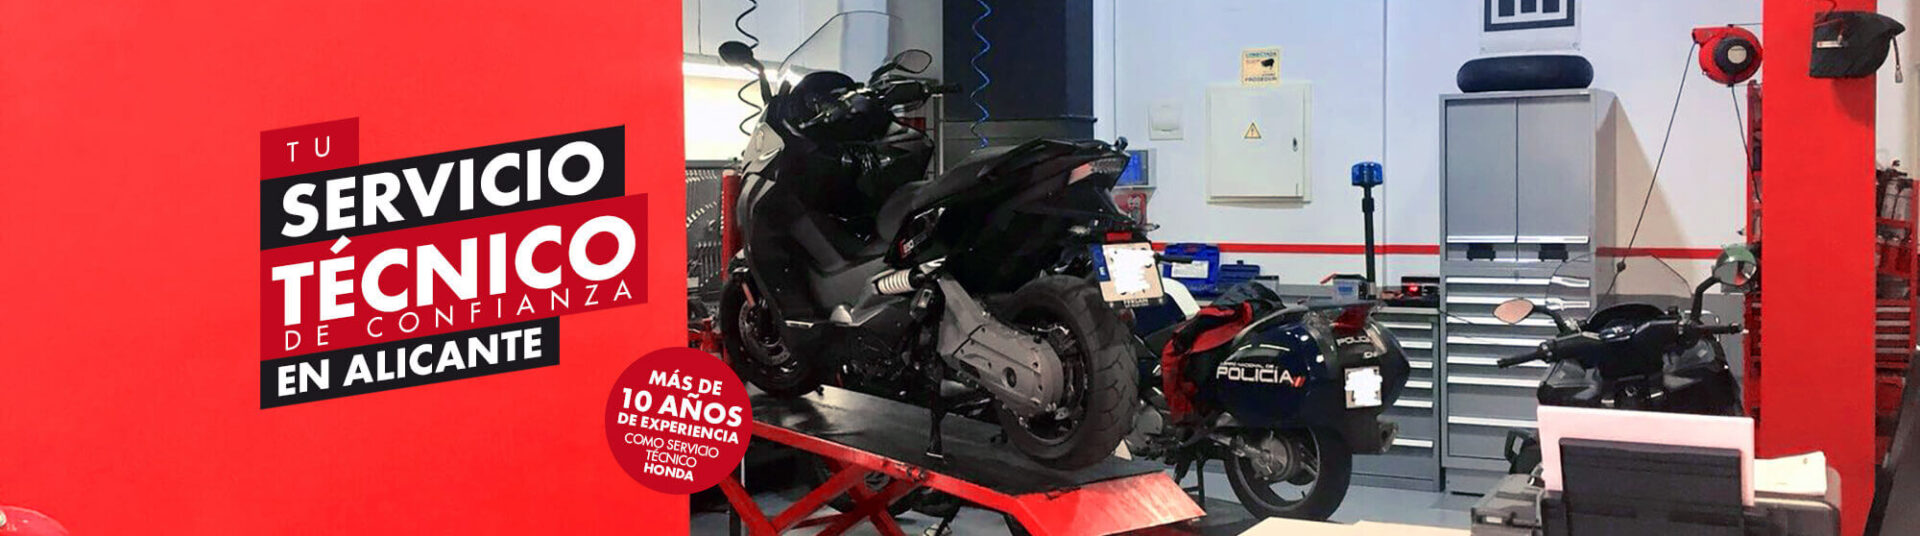 Servicio Técnico para motos en Alicante